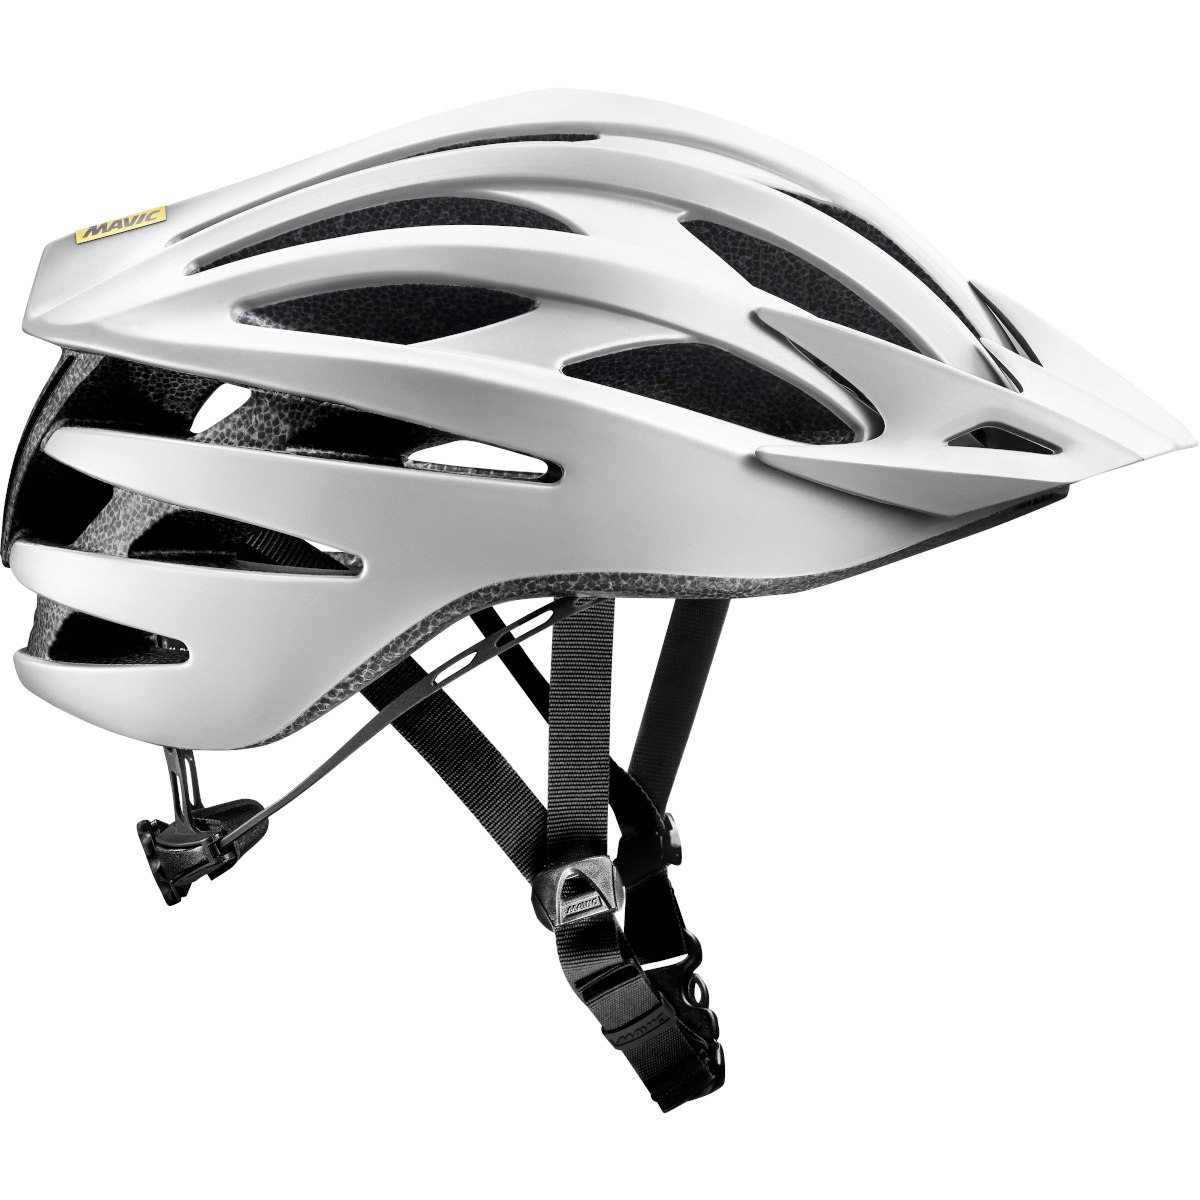 Productfoto van Mavic Crossride SL Elite Helm - white/black